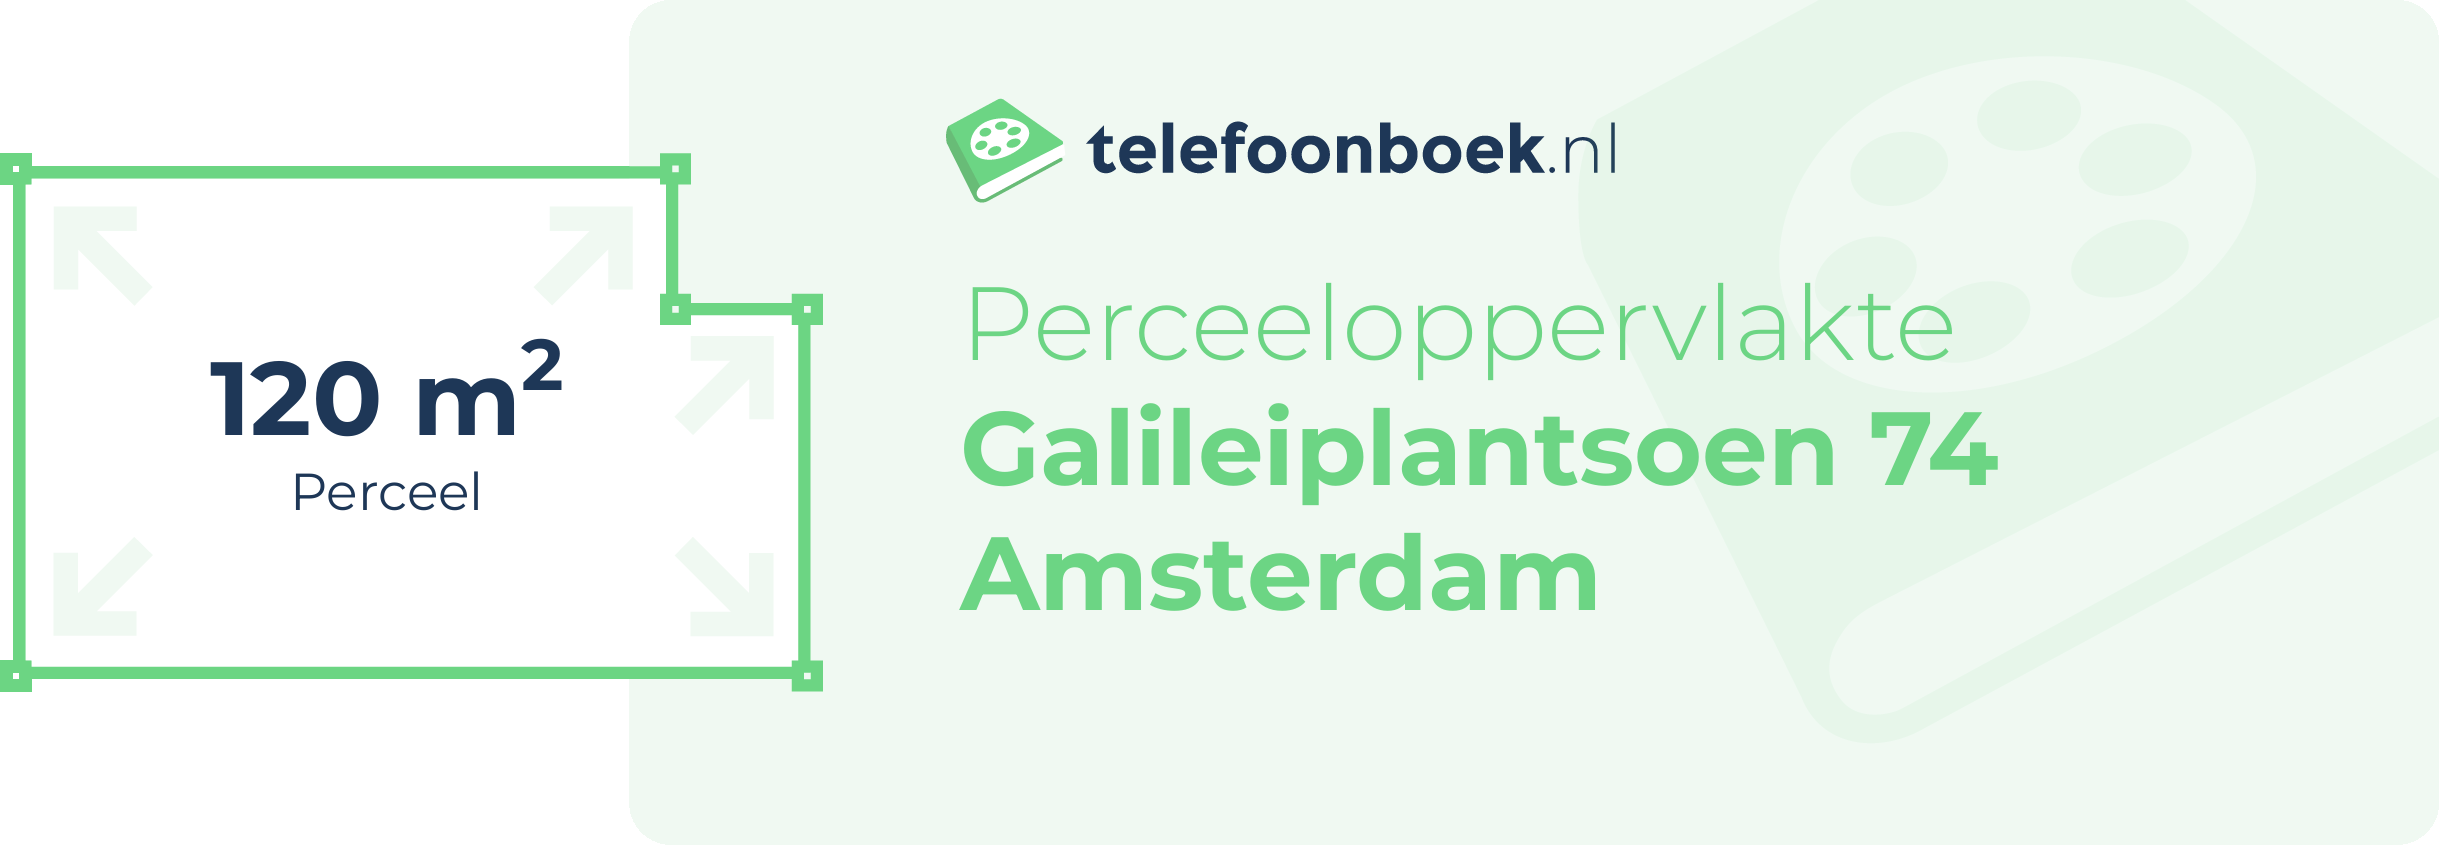 Perceeloppervlakte Galileiplantsoen 74 Amsterdam